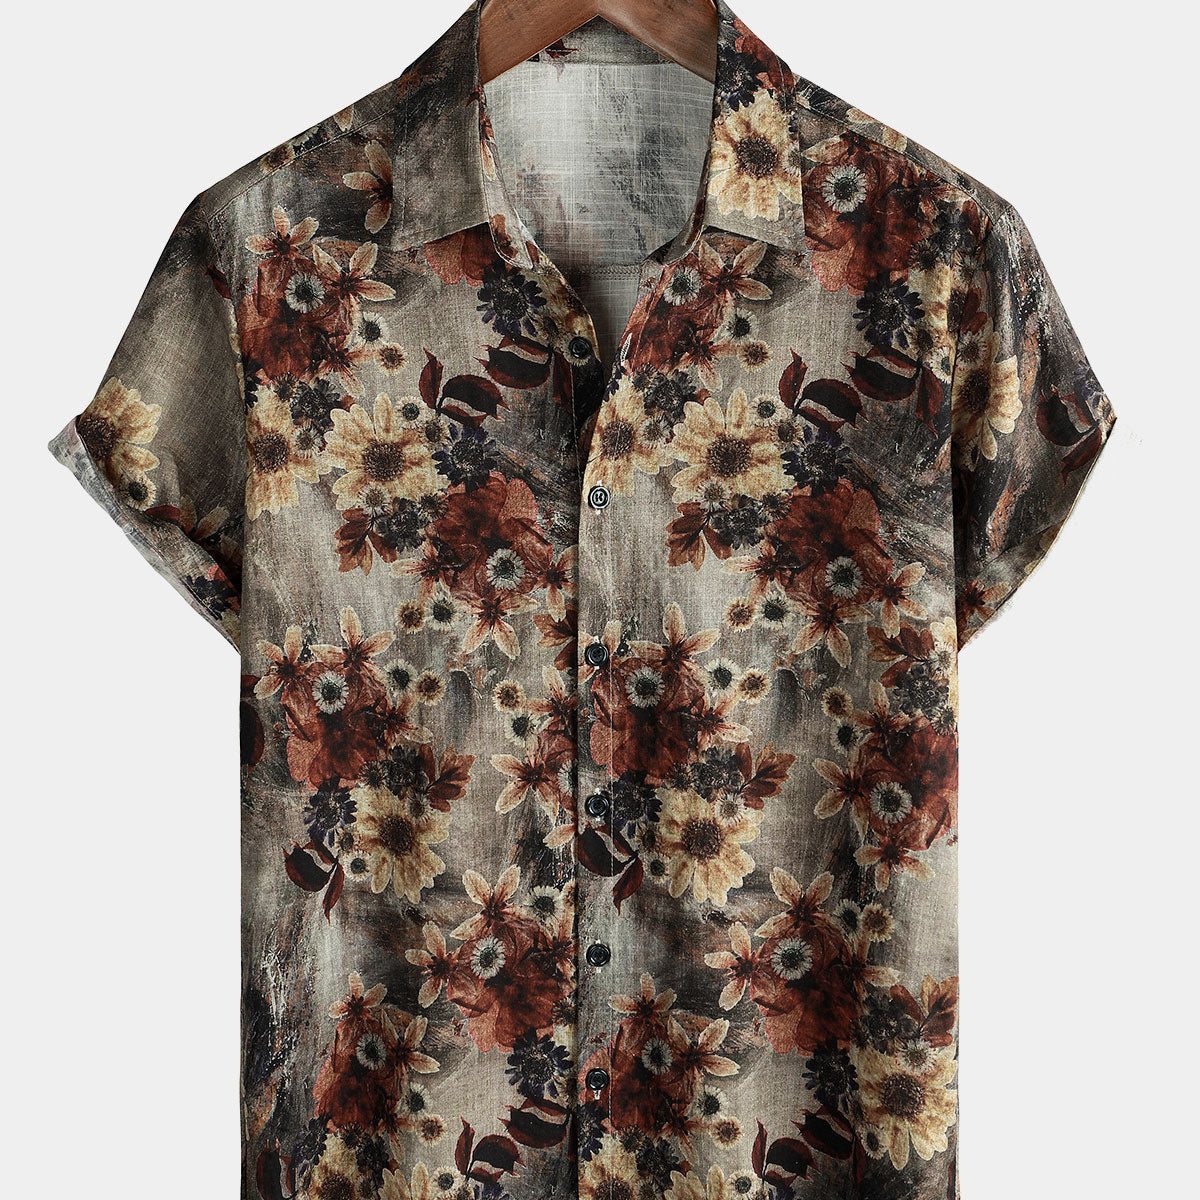 Men's Retro Floral Casual Short Sleeve Shirt